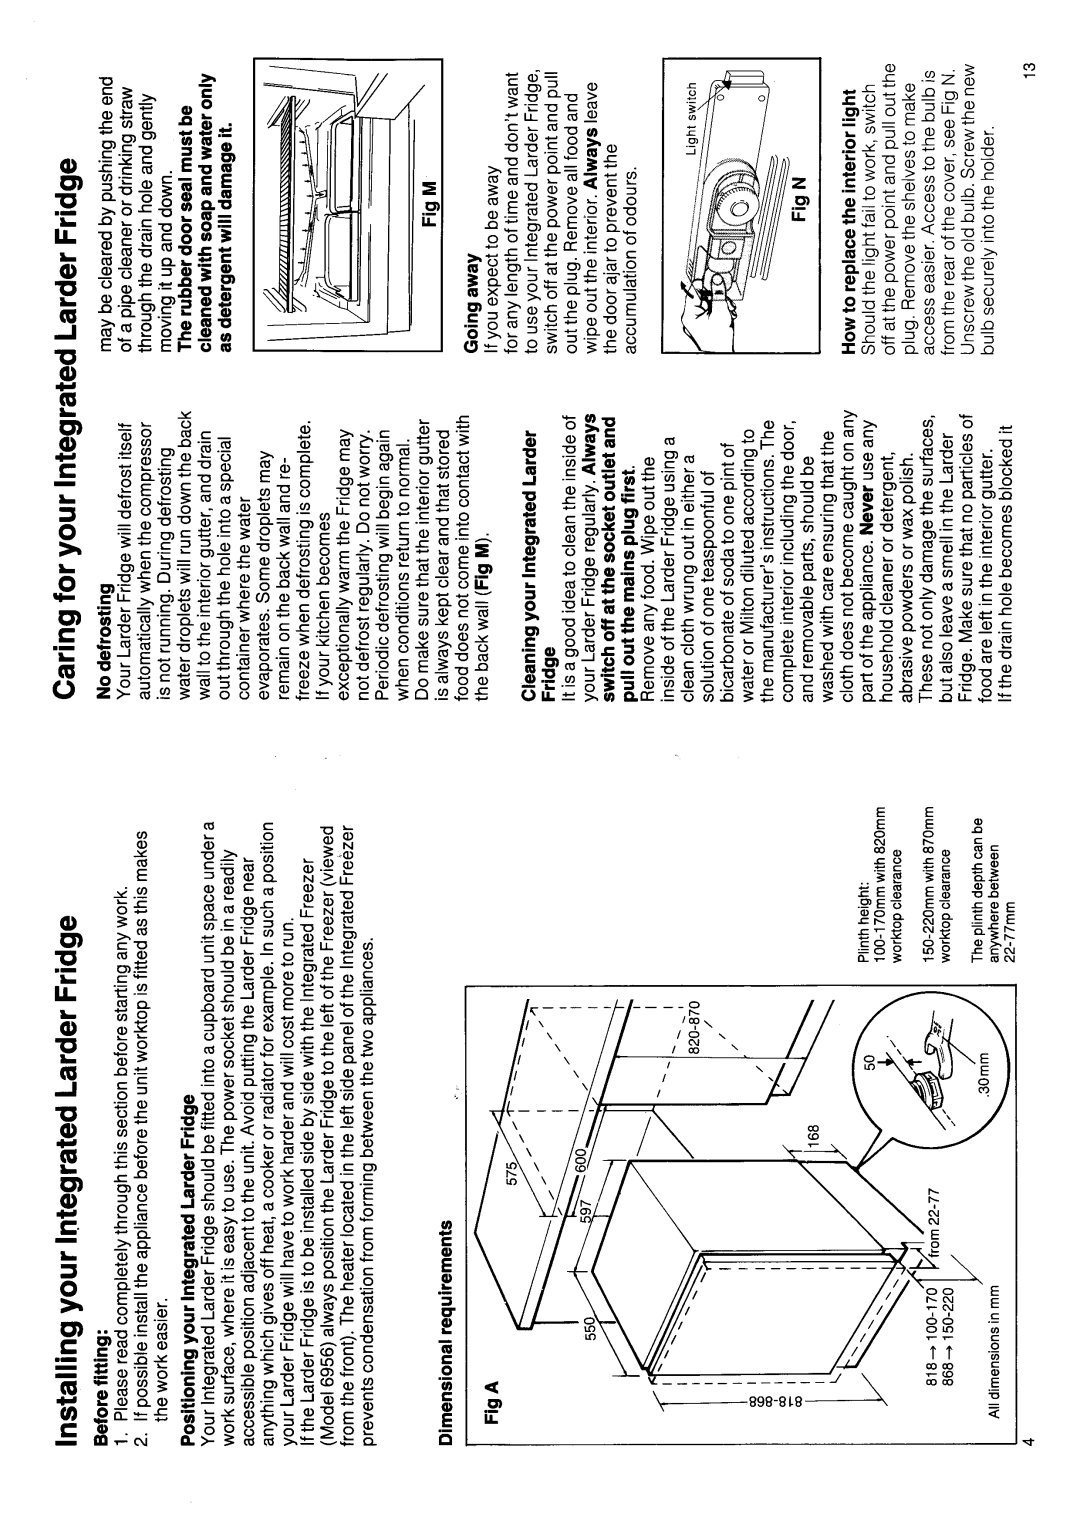 Hotpoint 6936 manual 